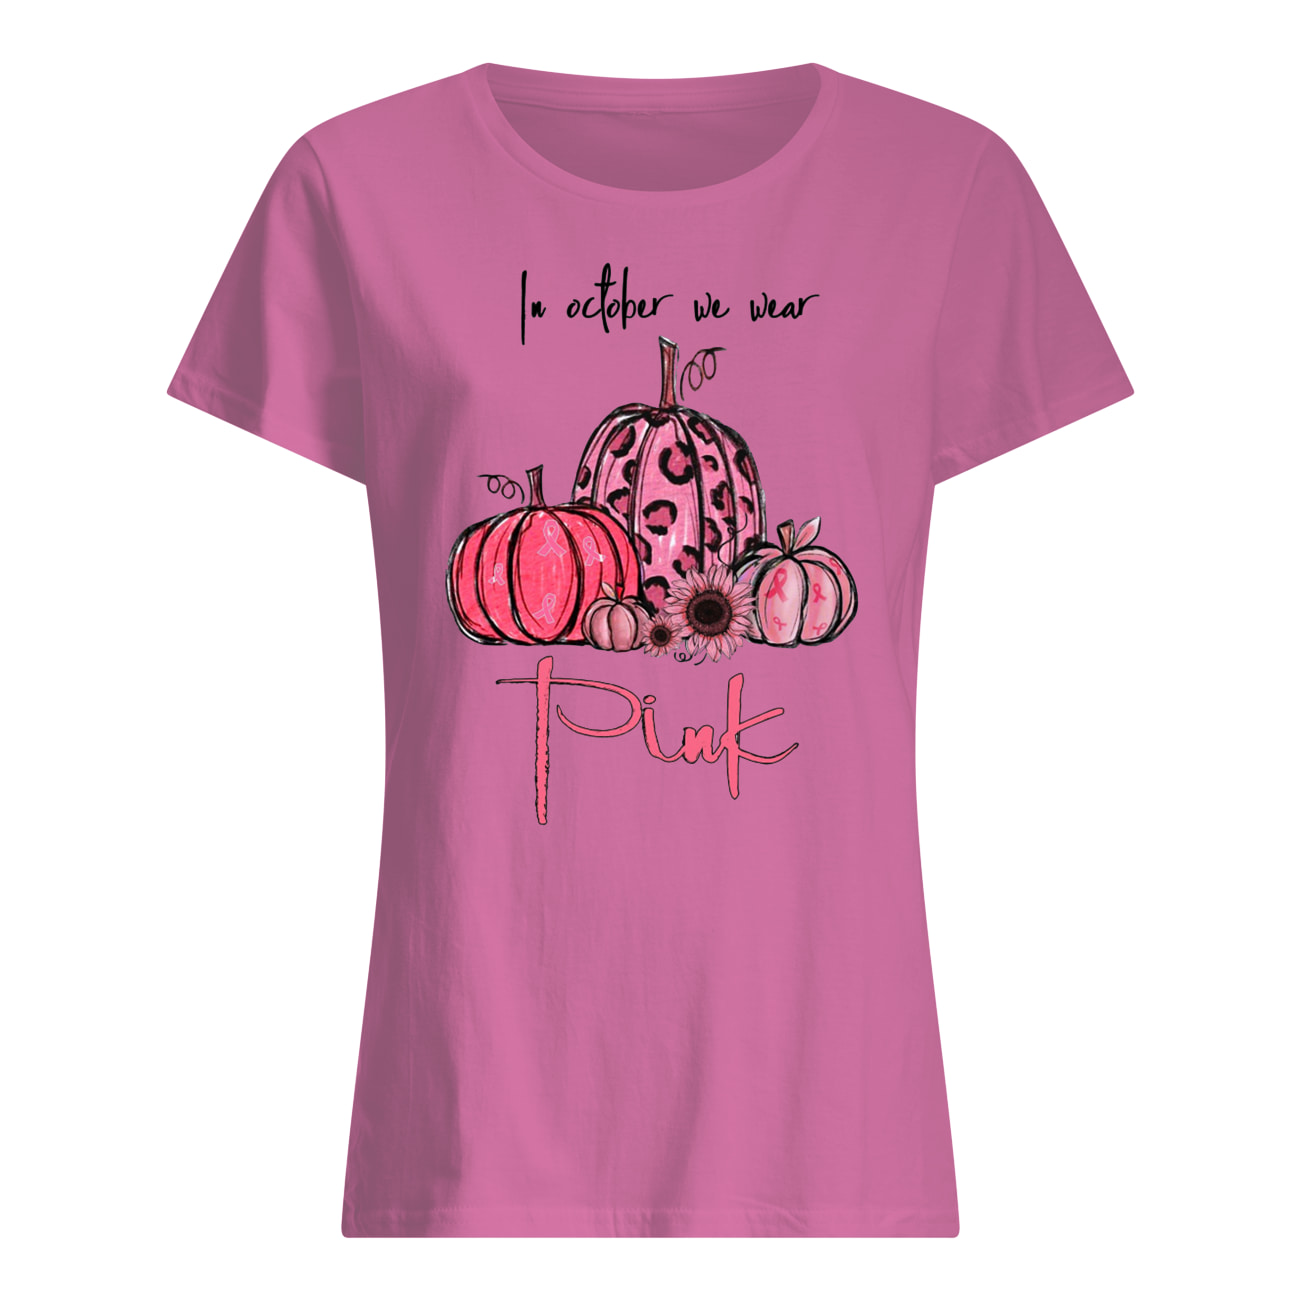 Pumpkin breast cancer in october we wear pink womens shirt